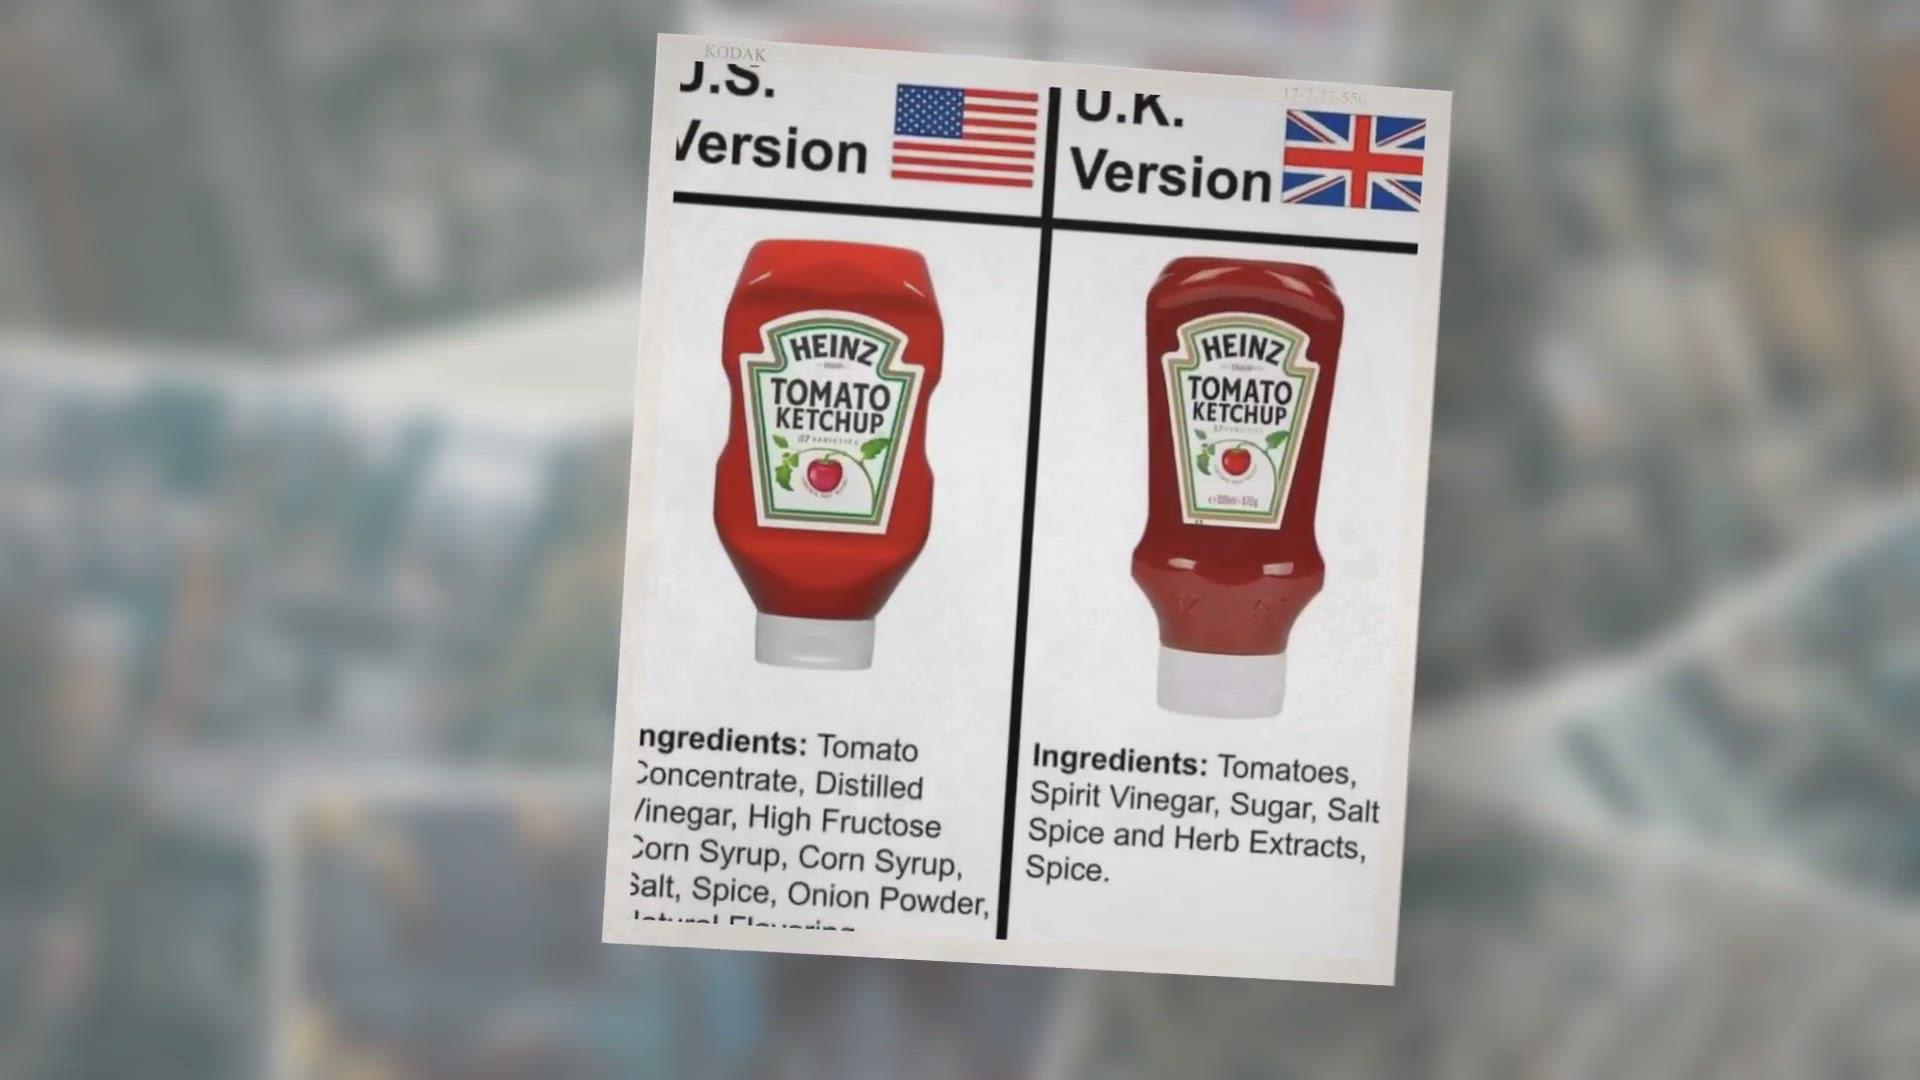 'Video thumbnail for Heinz Ketchup Ingredients, U.S. vs UK'